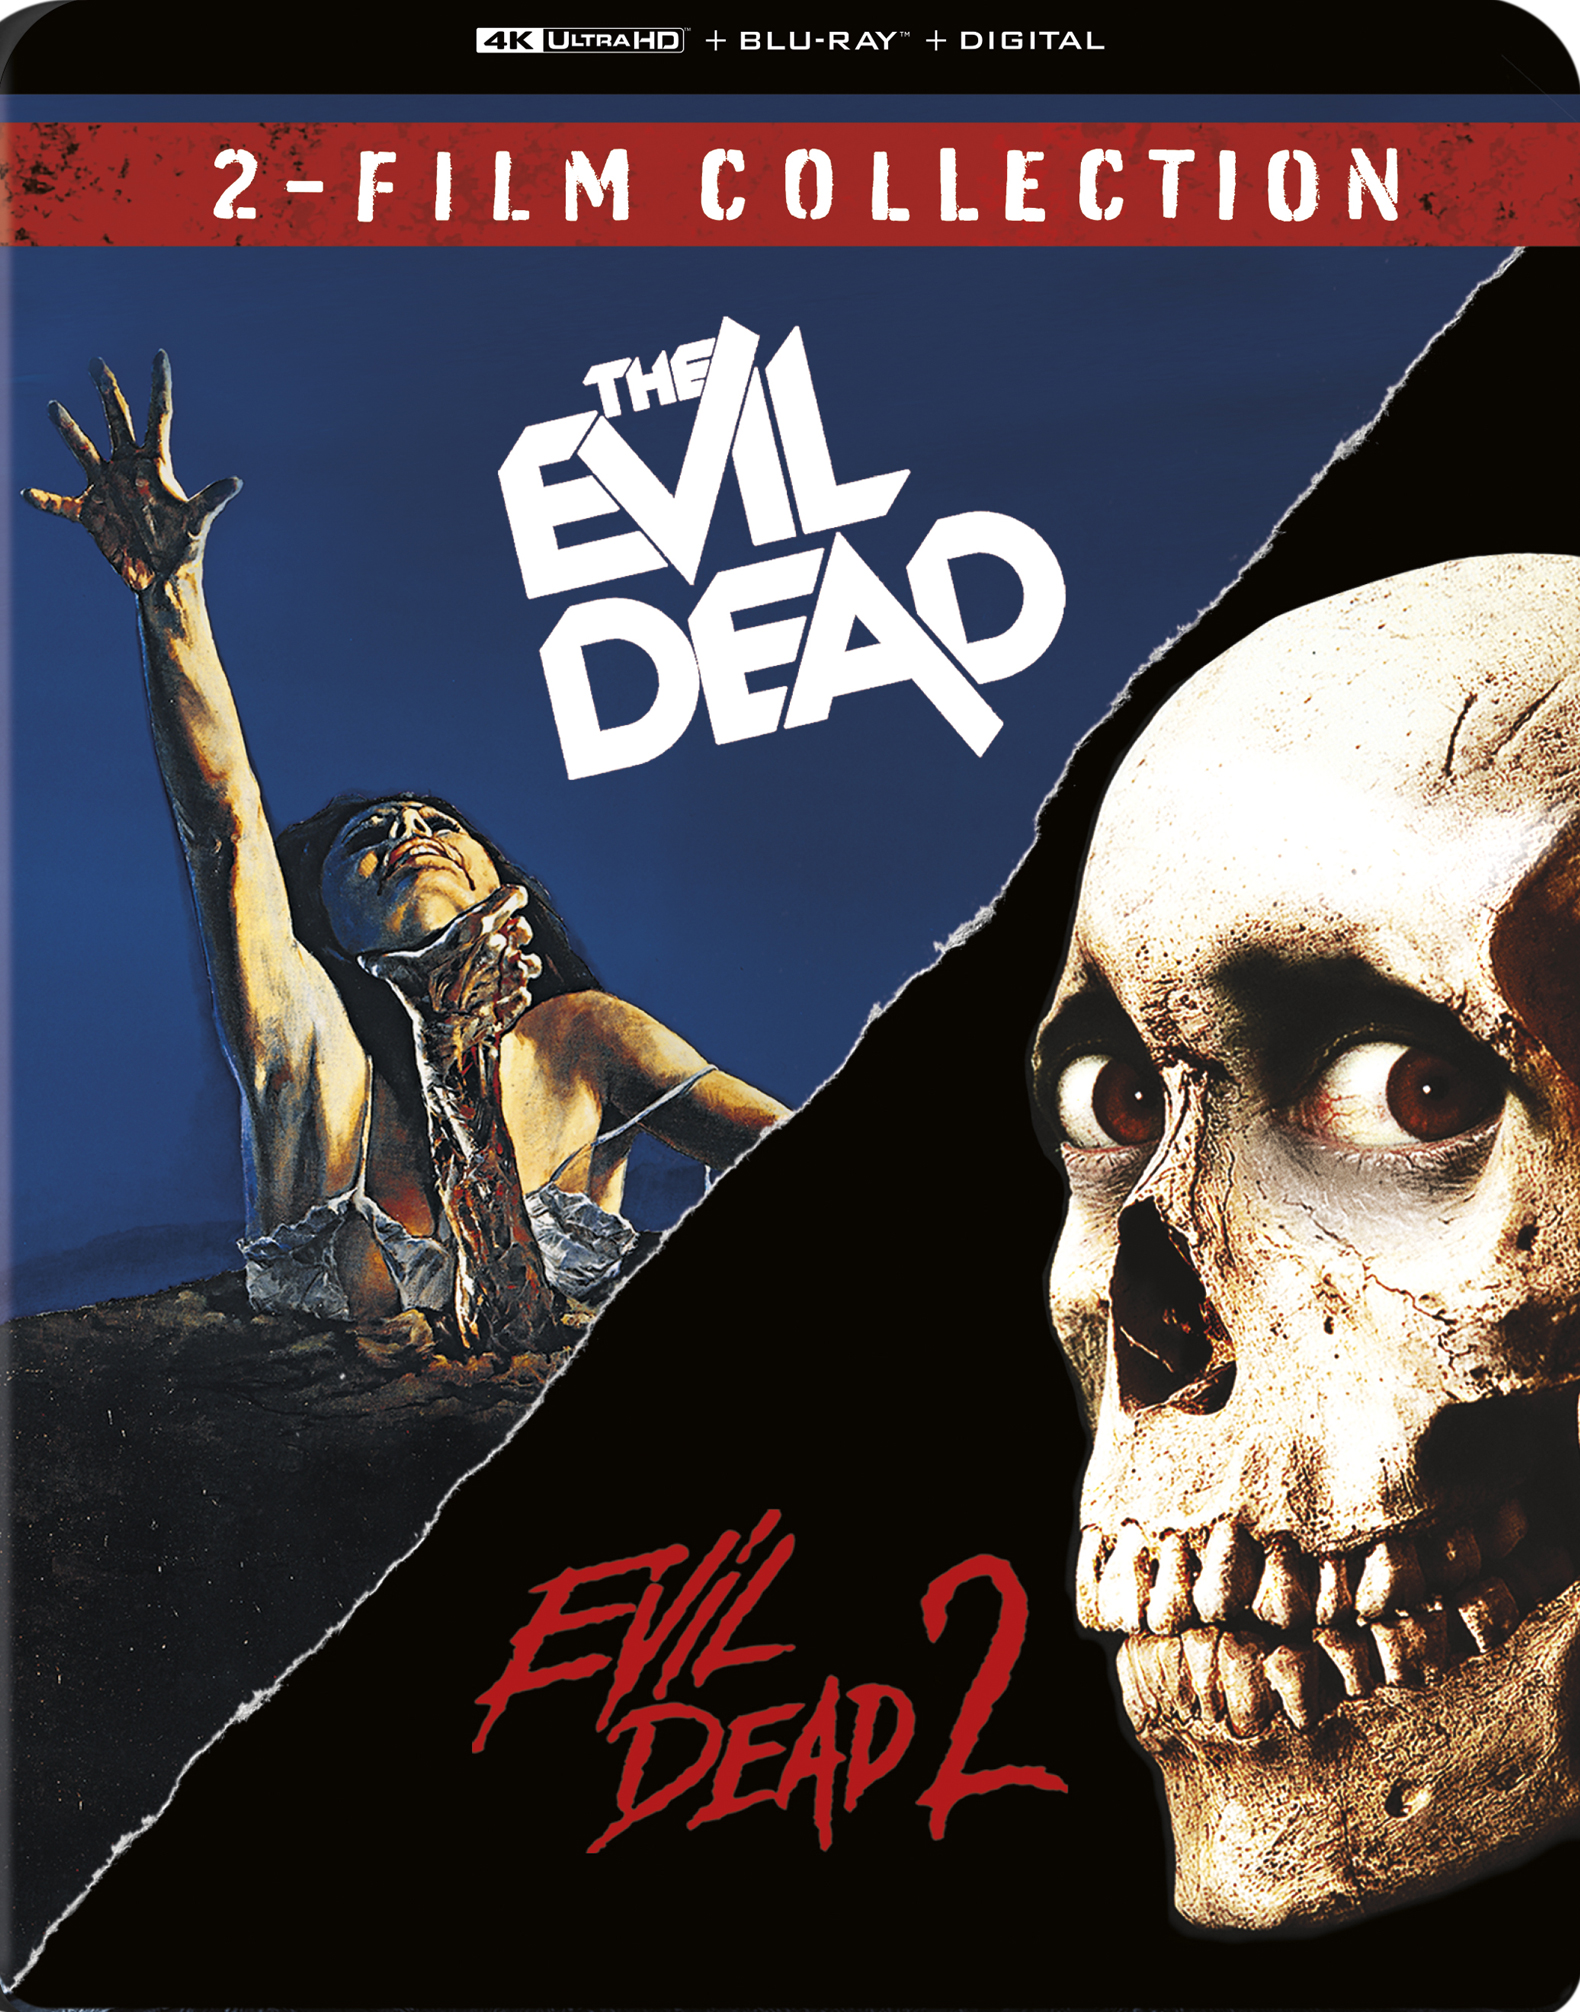 The Evil Dead 1 2 (DVD, 2005) for sale online